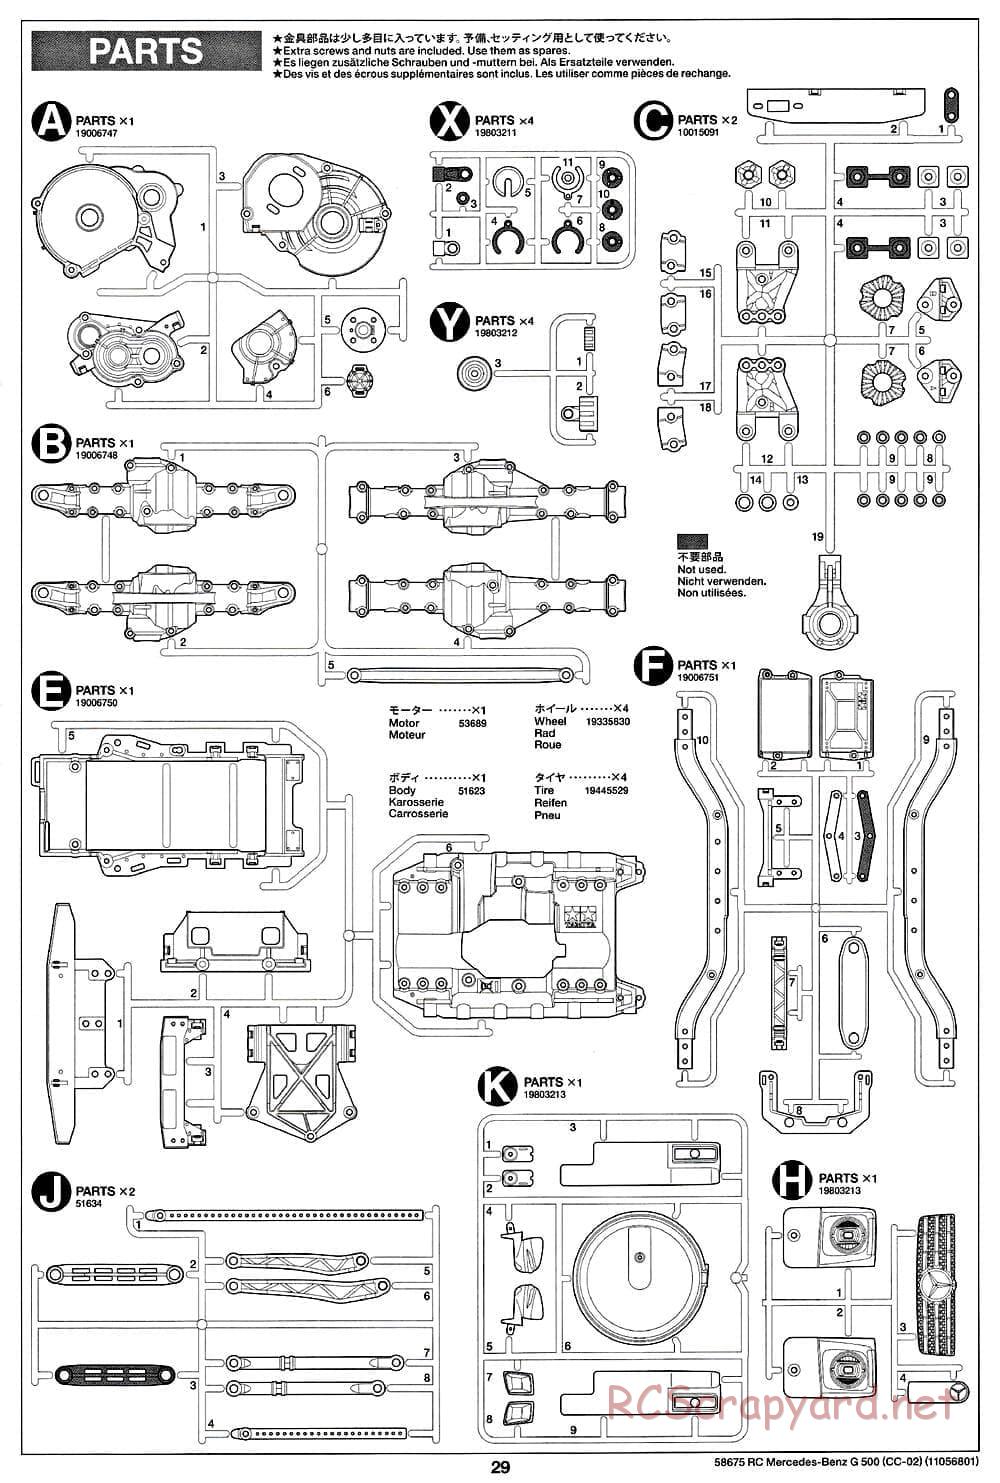 Tamiya - Mercedes-Benz G500 - CC-02 Chassis - Manual - Page 29